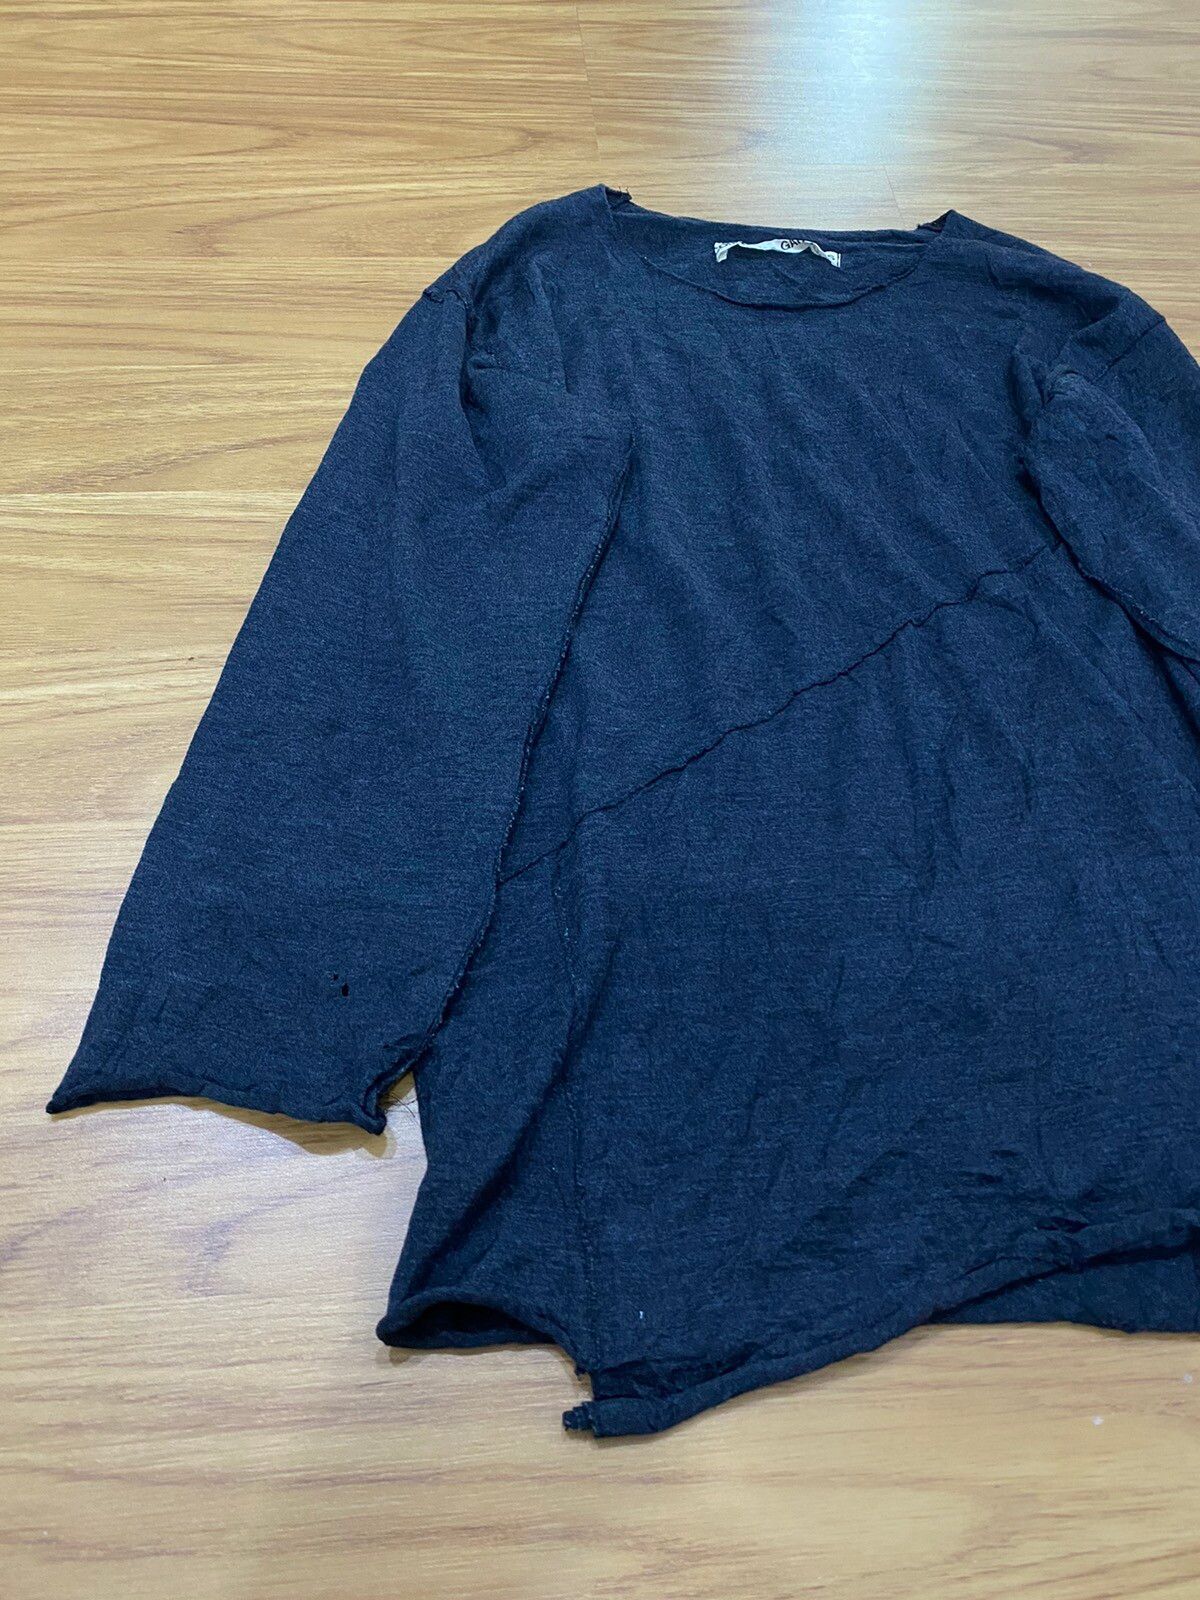 AW91 Rei Kawakubo Cut And Sew Wool Sample L/S Shirt - 2